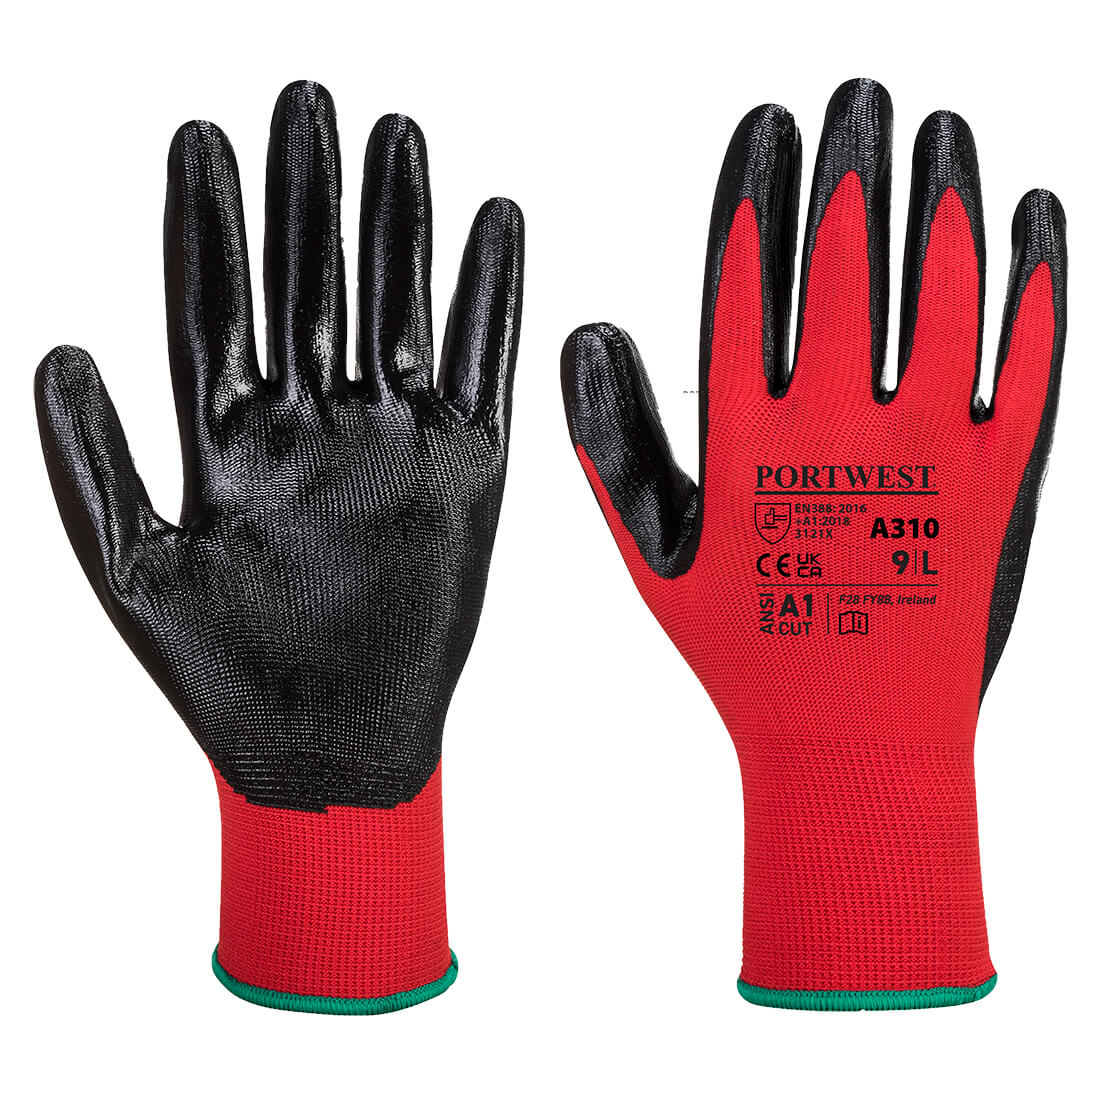 A310 Flexo Grip Nitrile Glove Red/Black